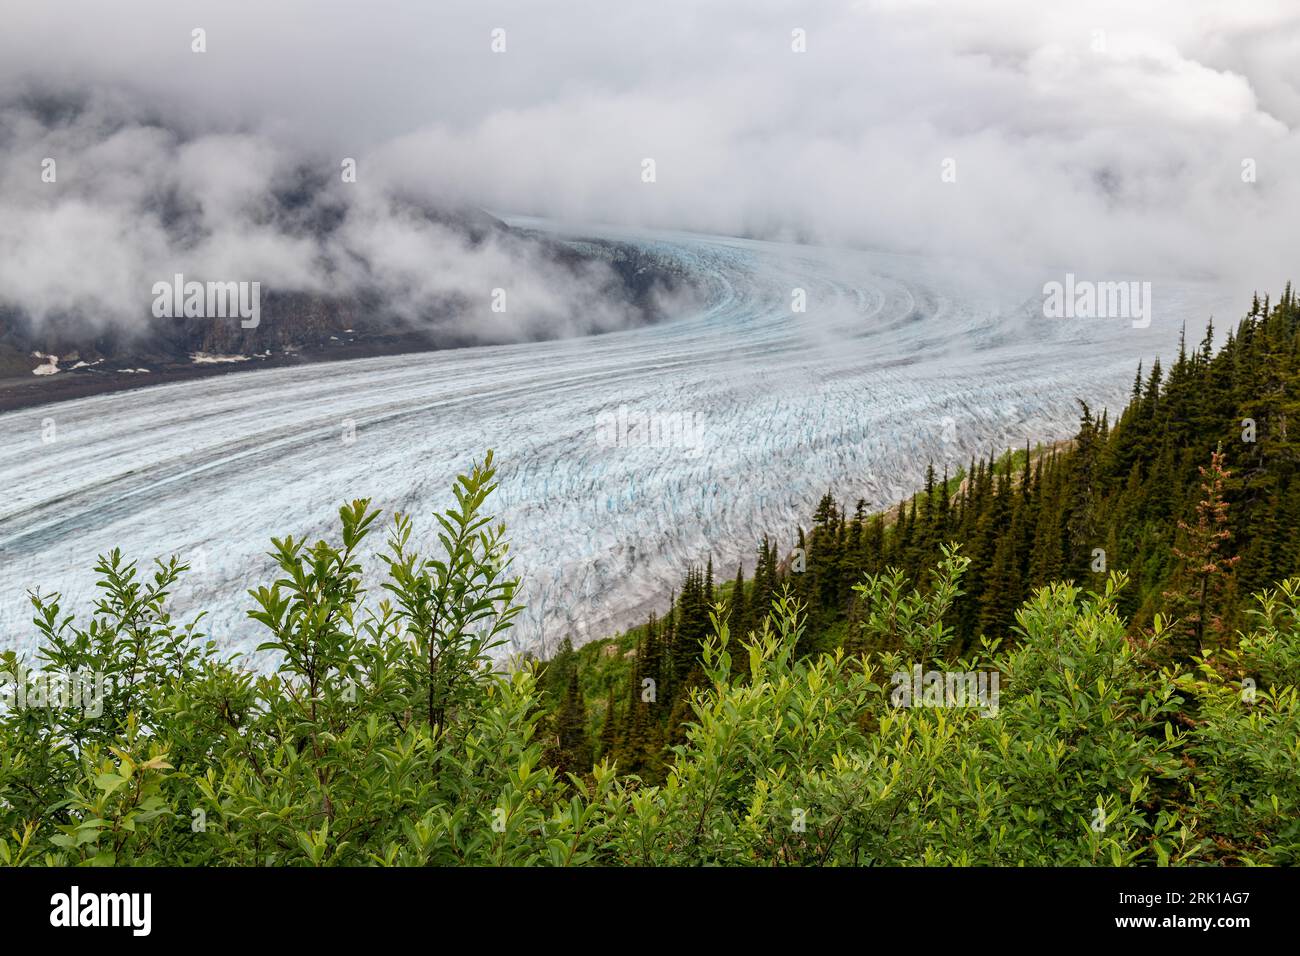 Salmon glacier in the mist, Stewart, British Columbia, Canada. Stock Photo